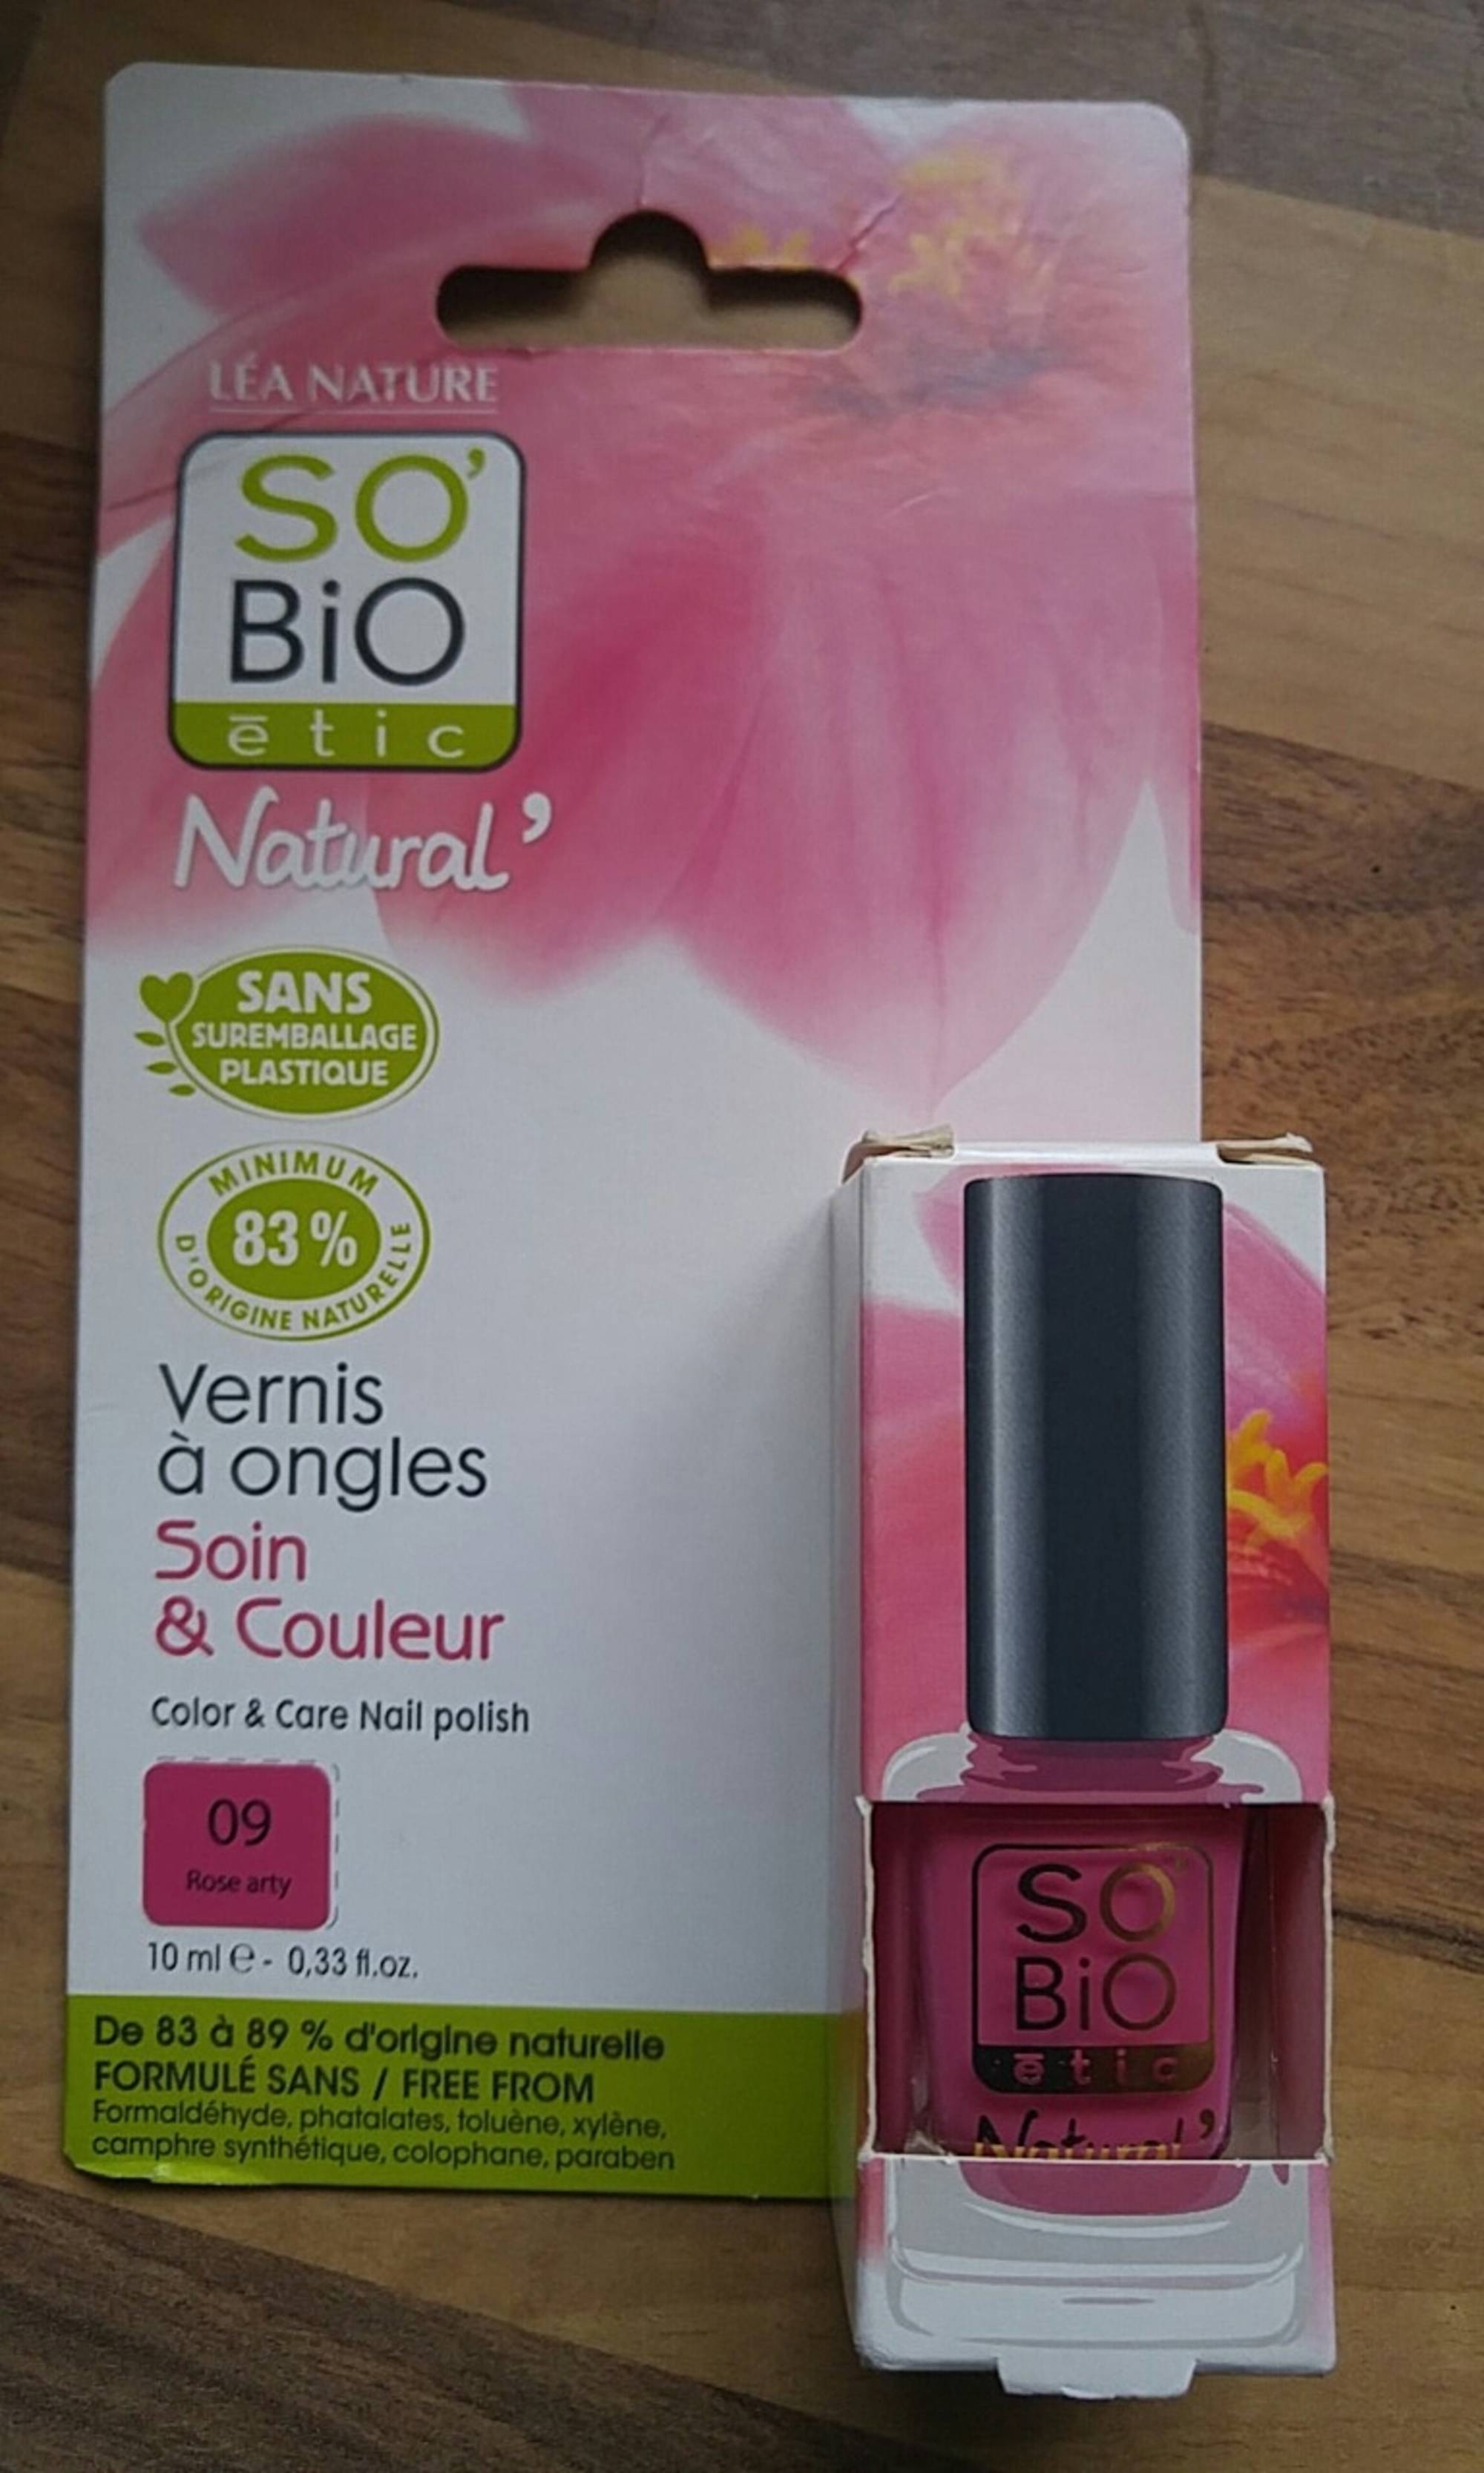 SO'BIO ÉTIC - Soin & couleur - Vernis à ongles 09 rose arty